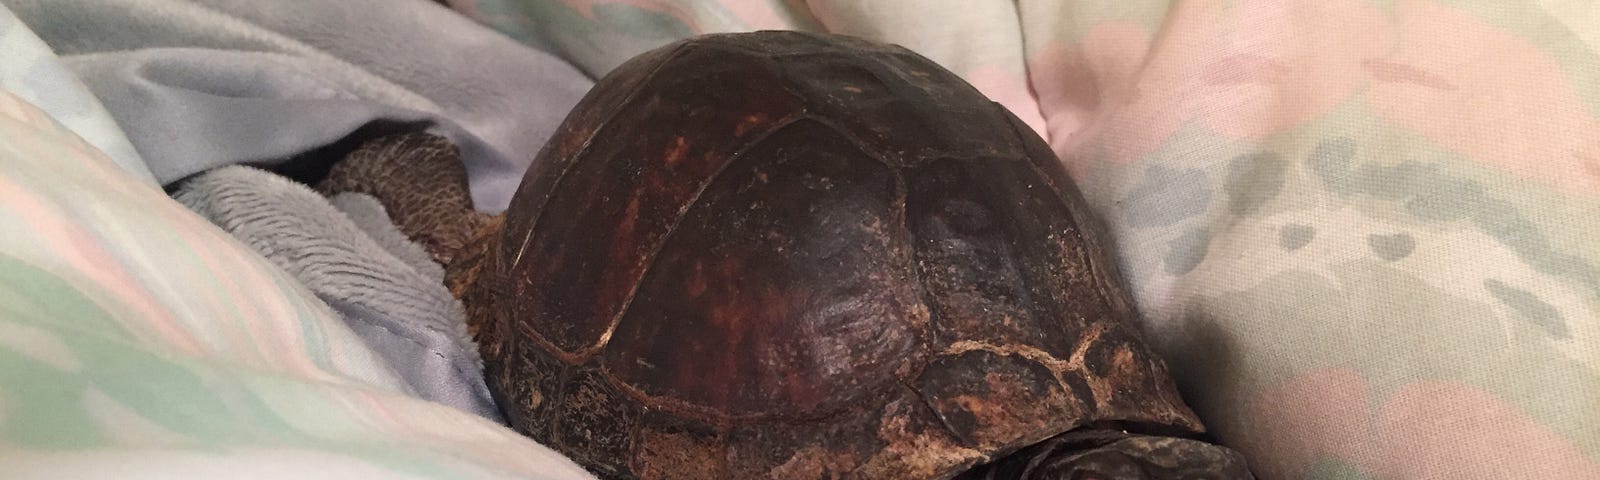 Adorable brown box turtle on a comforter